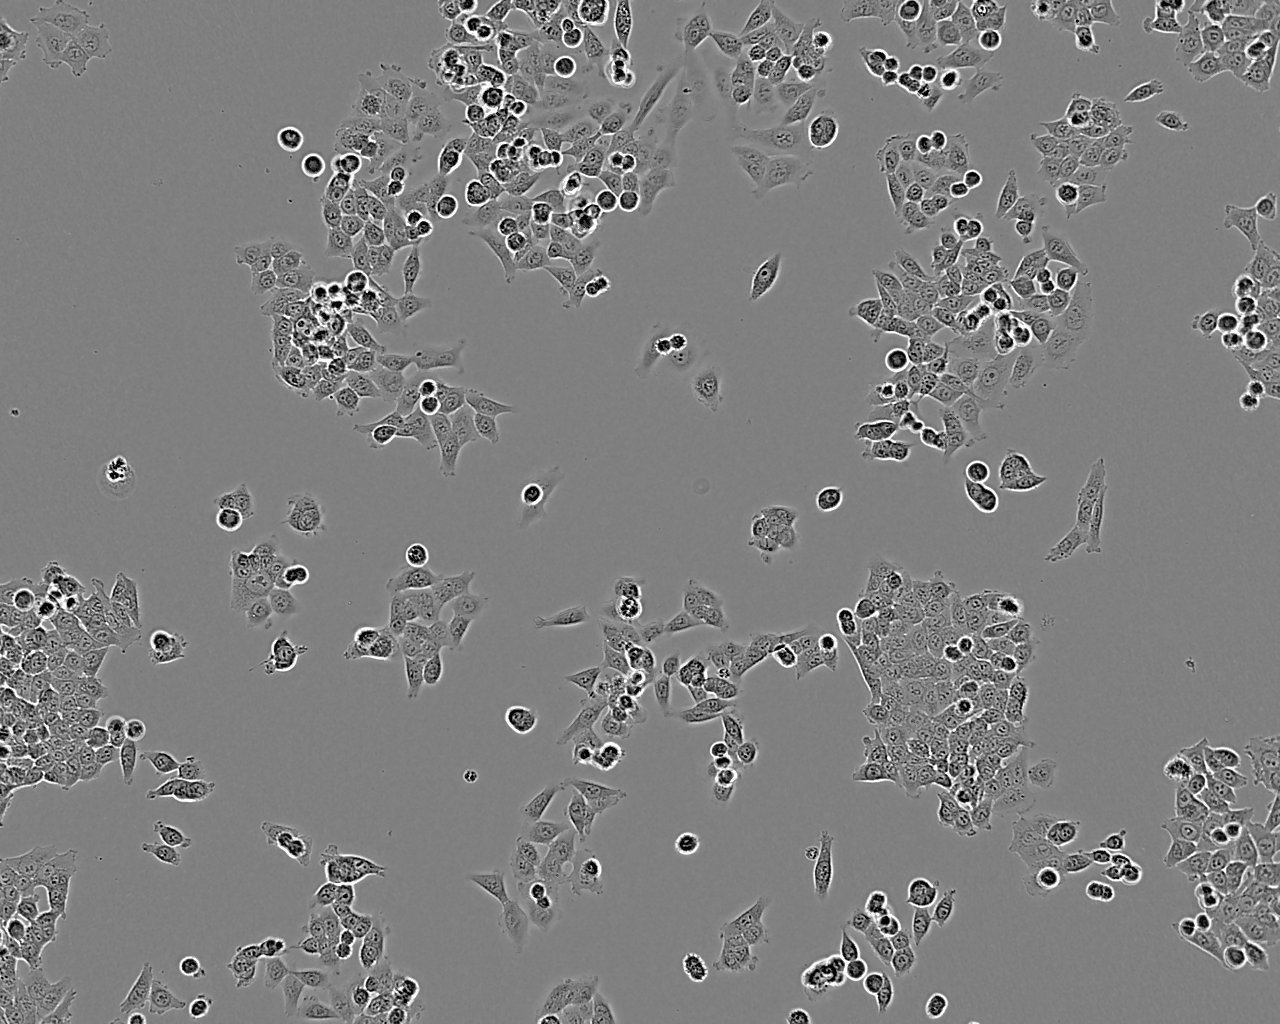 NCI-H520 epithelioid cells人肺腺鳞癌细胞系,NCI-H520 epithelioid cells